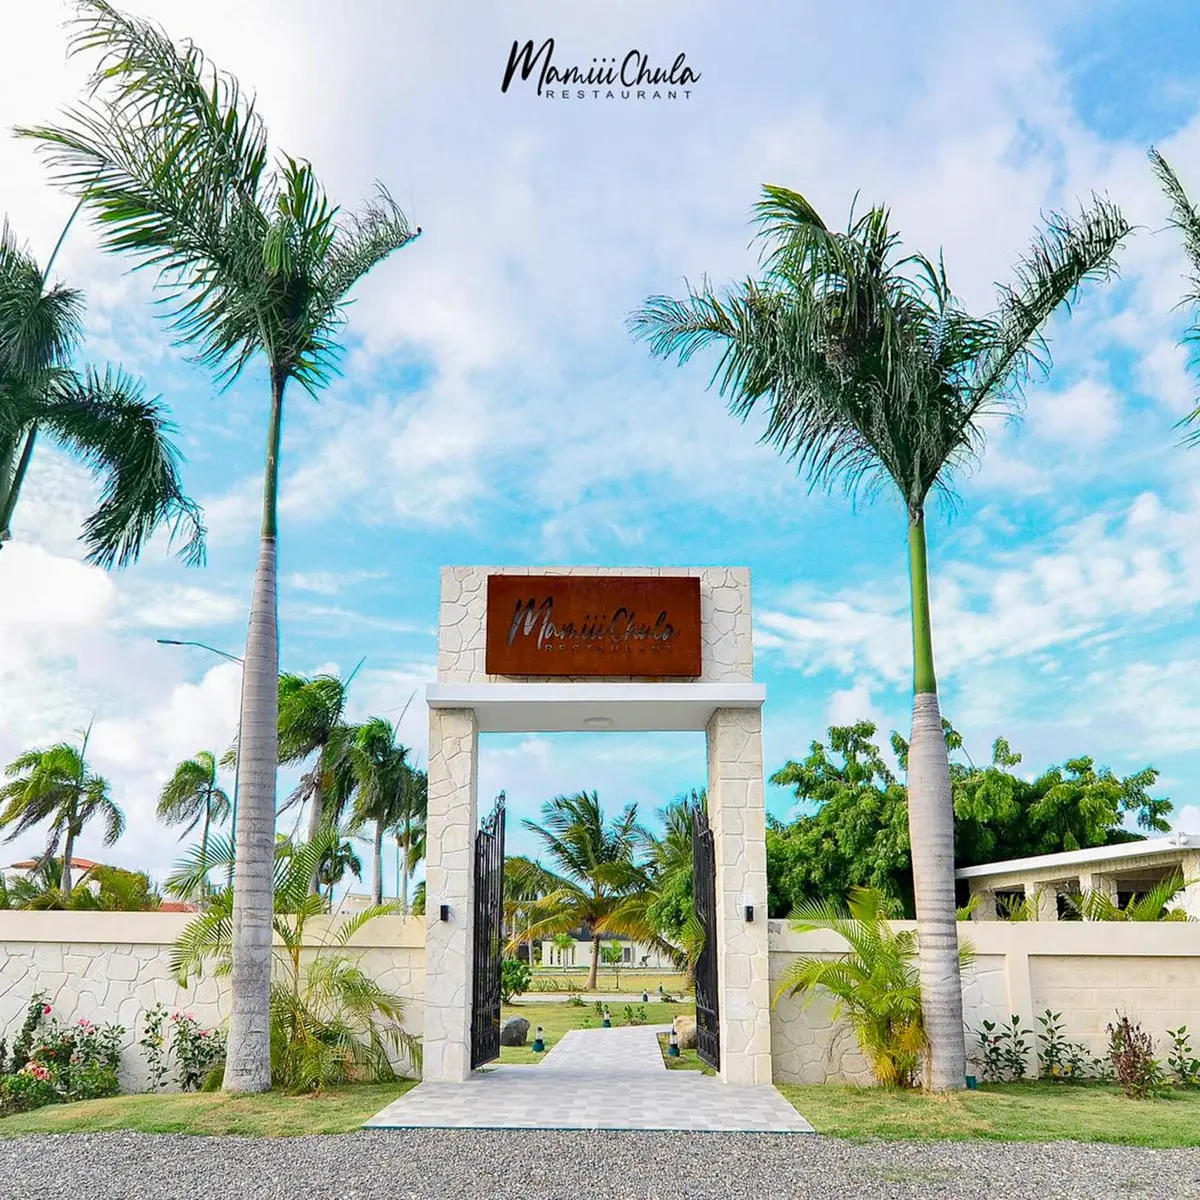 The entrance gate to Mamiii Chula Restaurant at Playa Palmera Beach Resort.